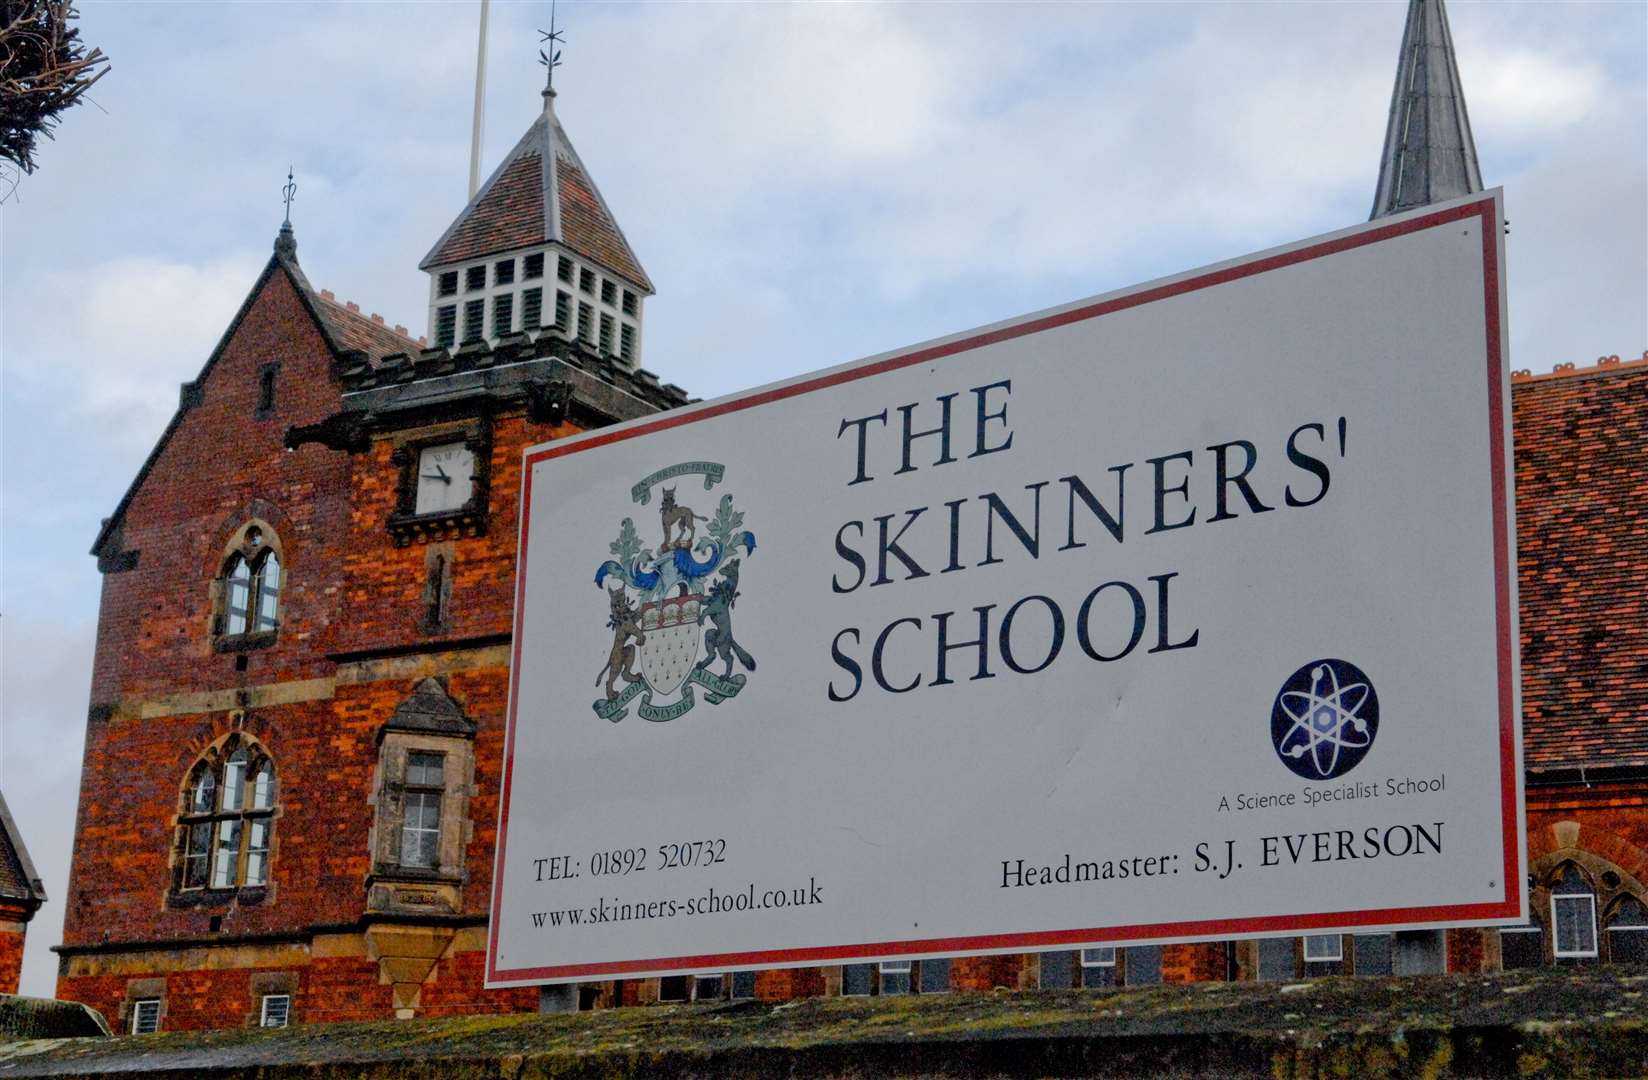 The Skinners' School in Tunbridge Wells has links to the old London fur trade. Picture: Matthew Walker